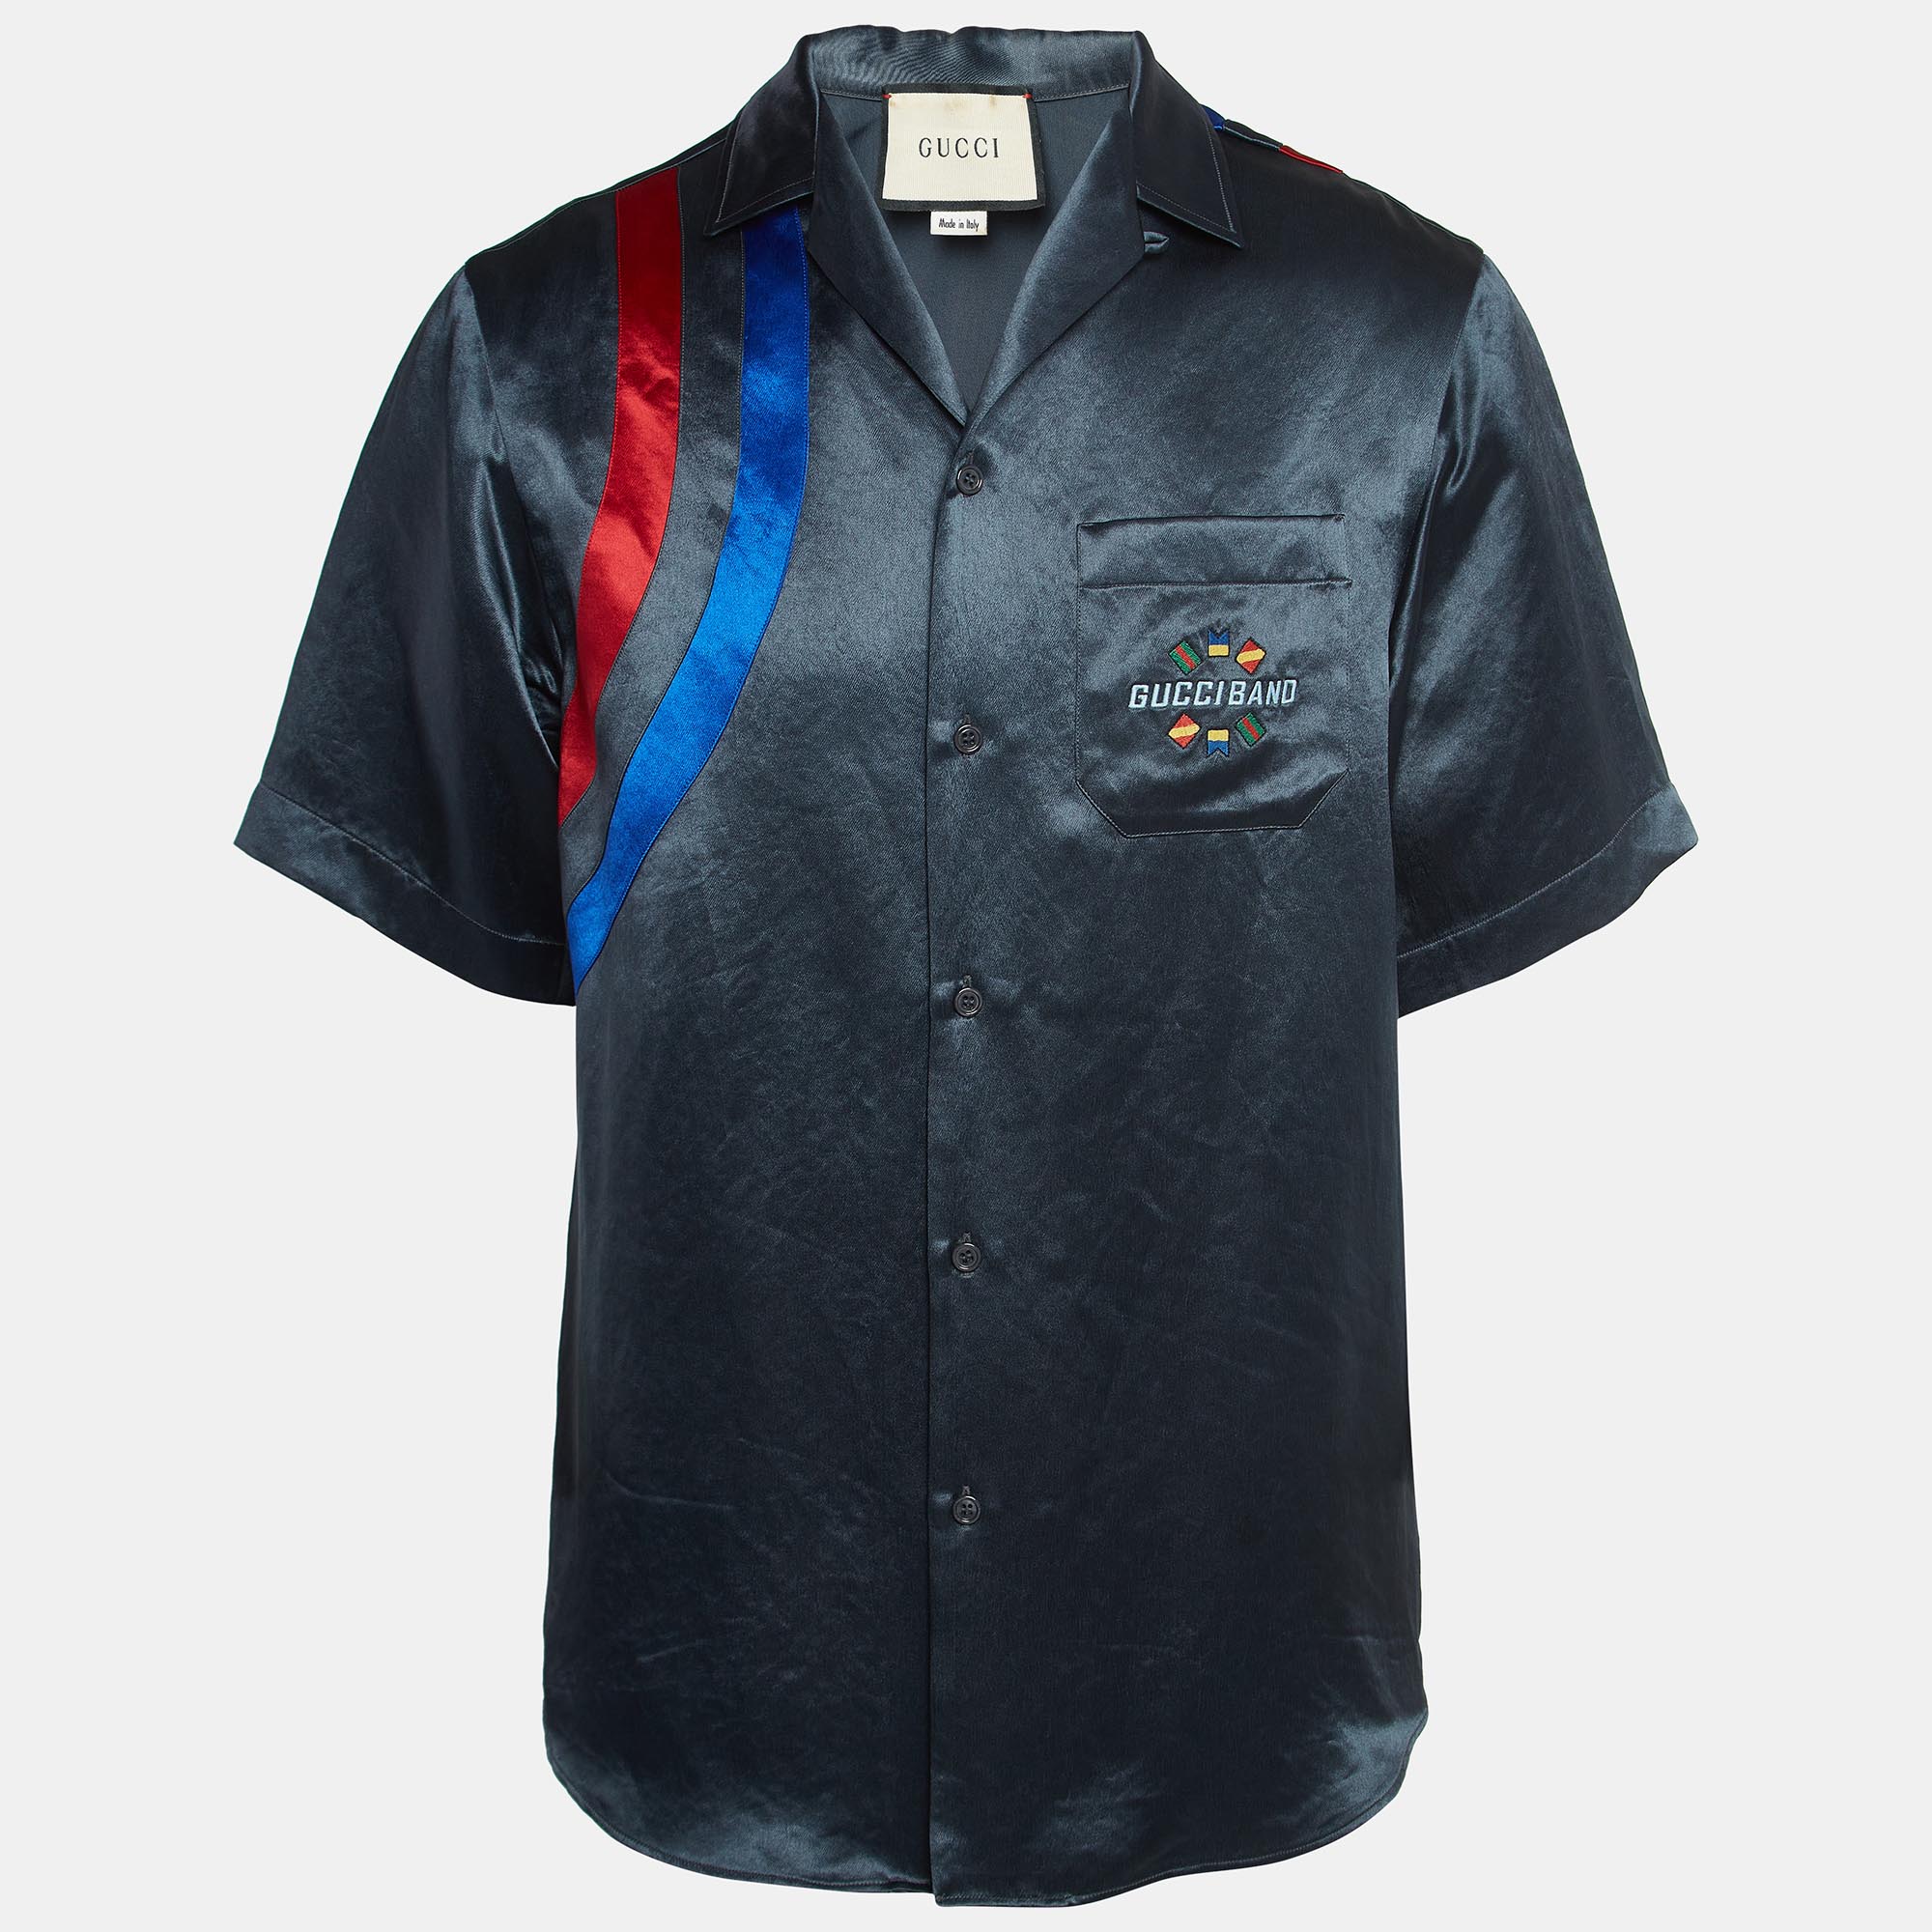 Gucci dark blue satin embroidered bowling shirt s